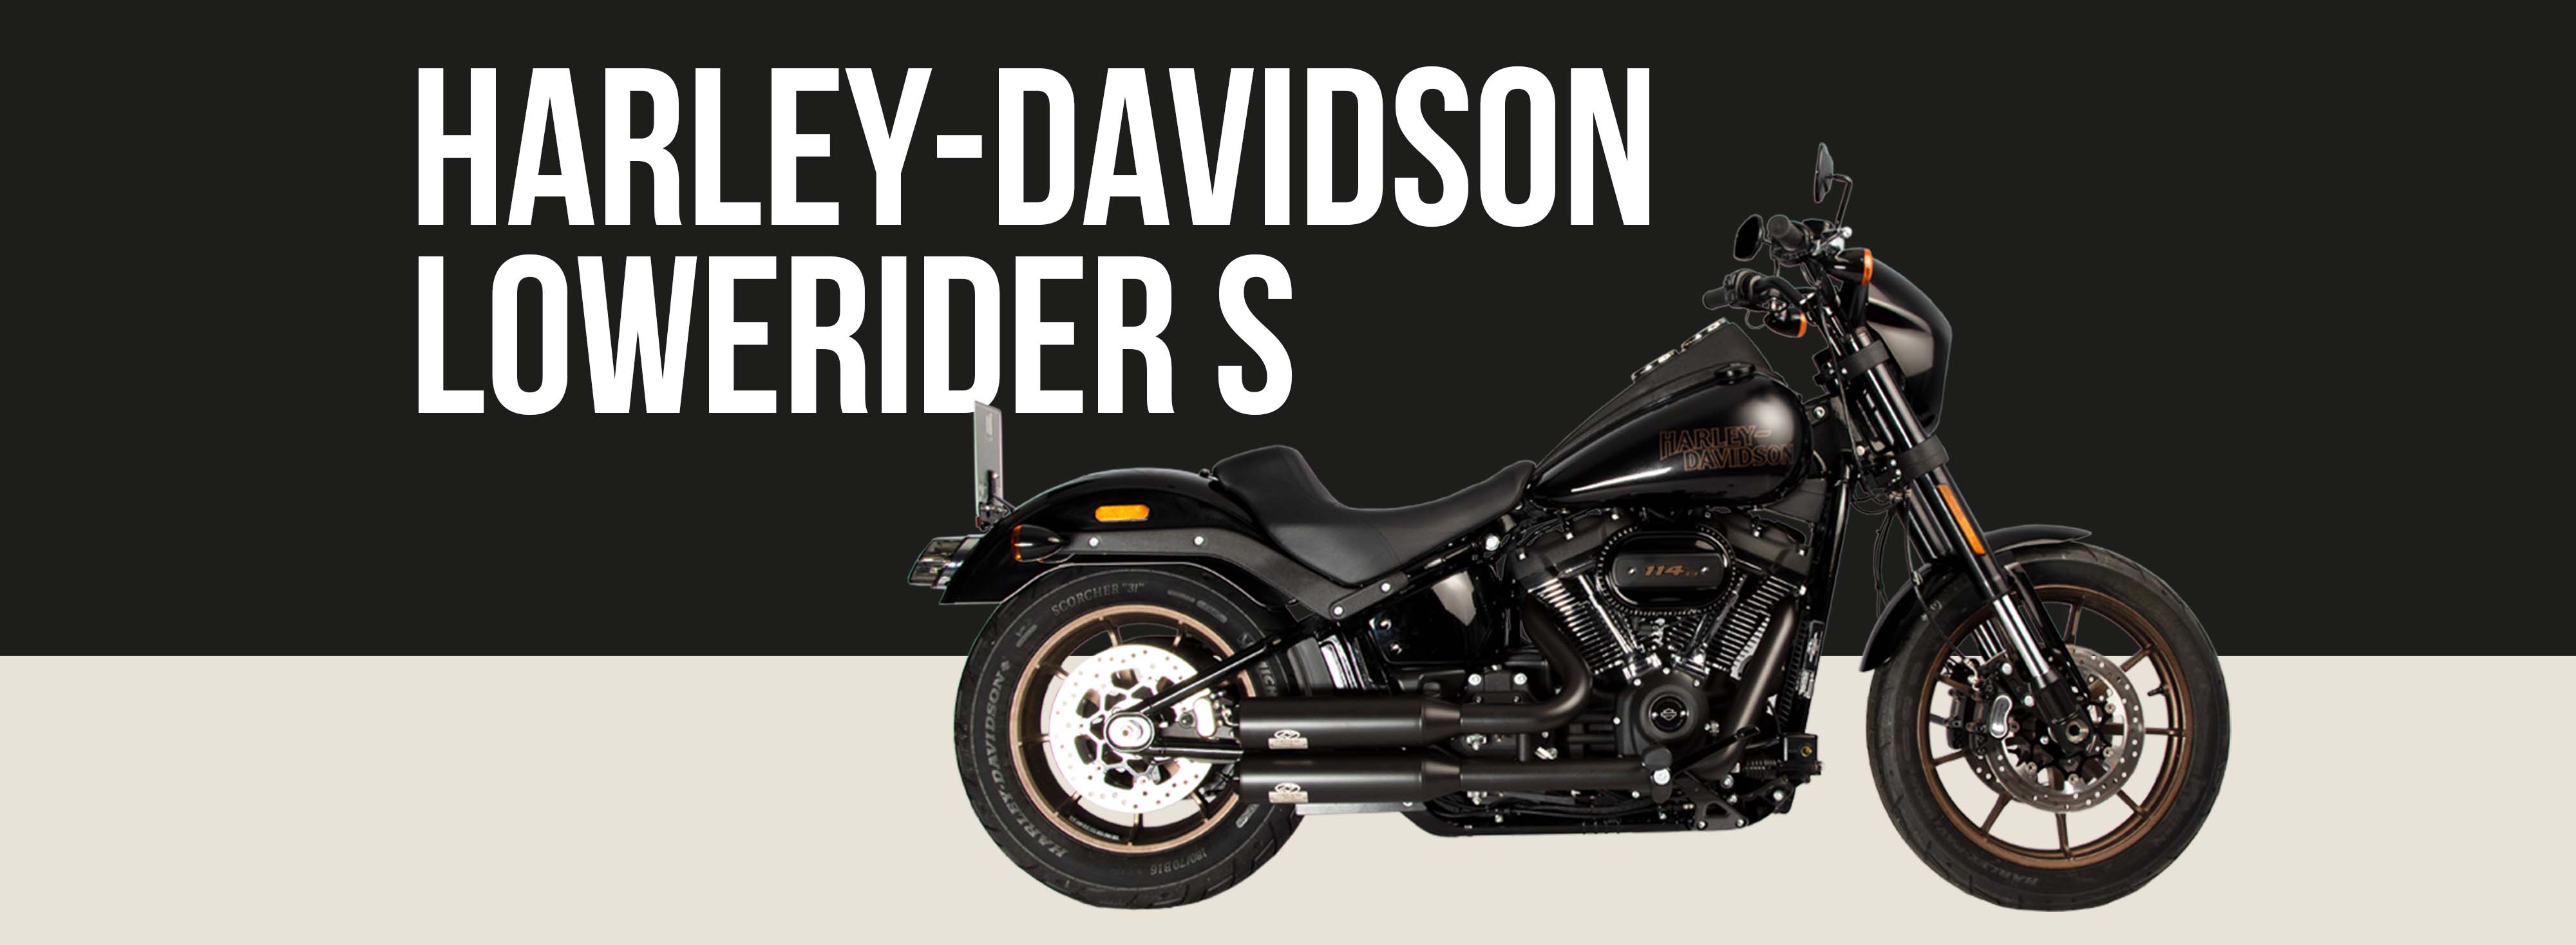 Harley-davidson Lowrider S Motorcycle Brand Page Header